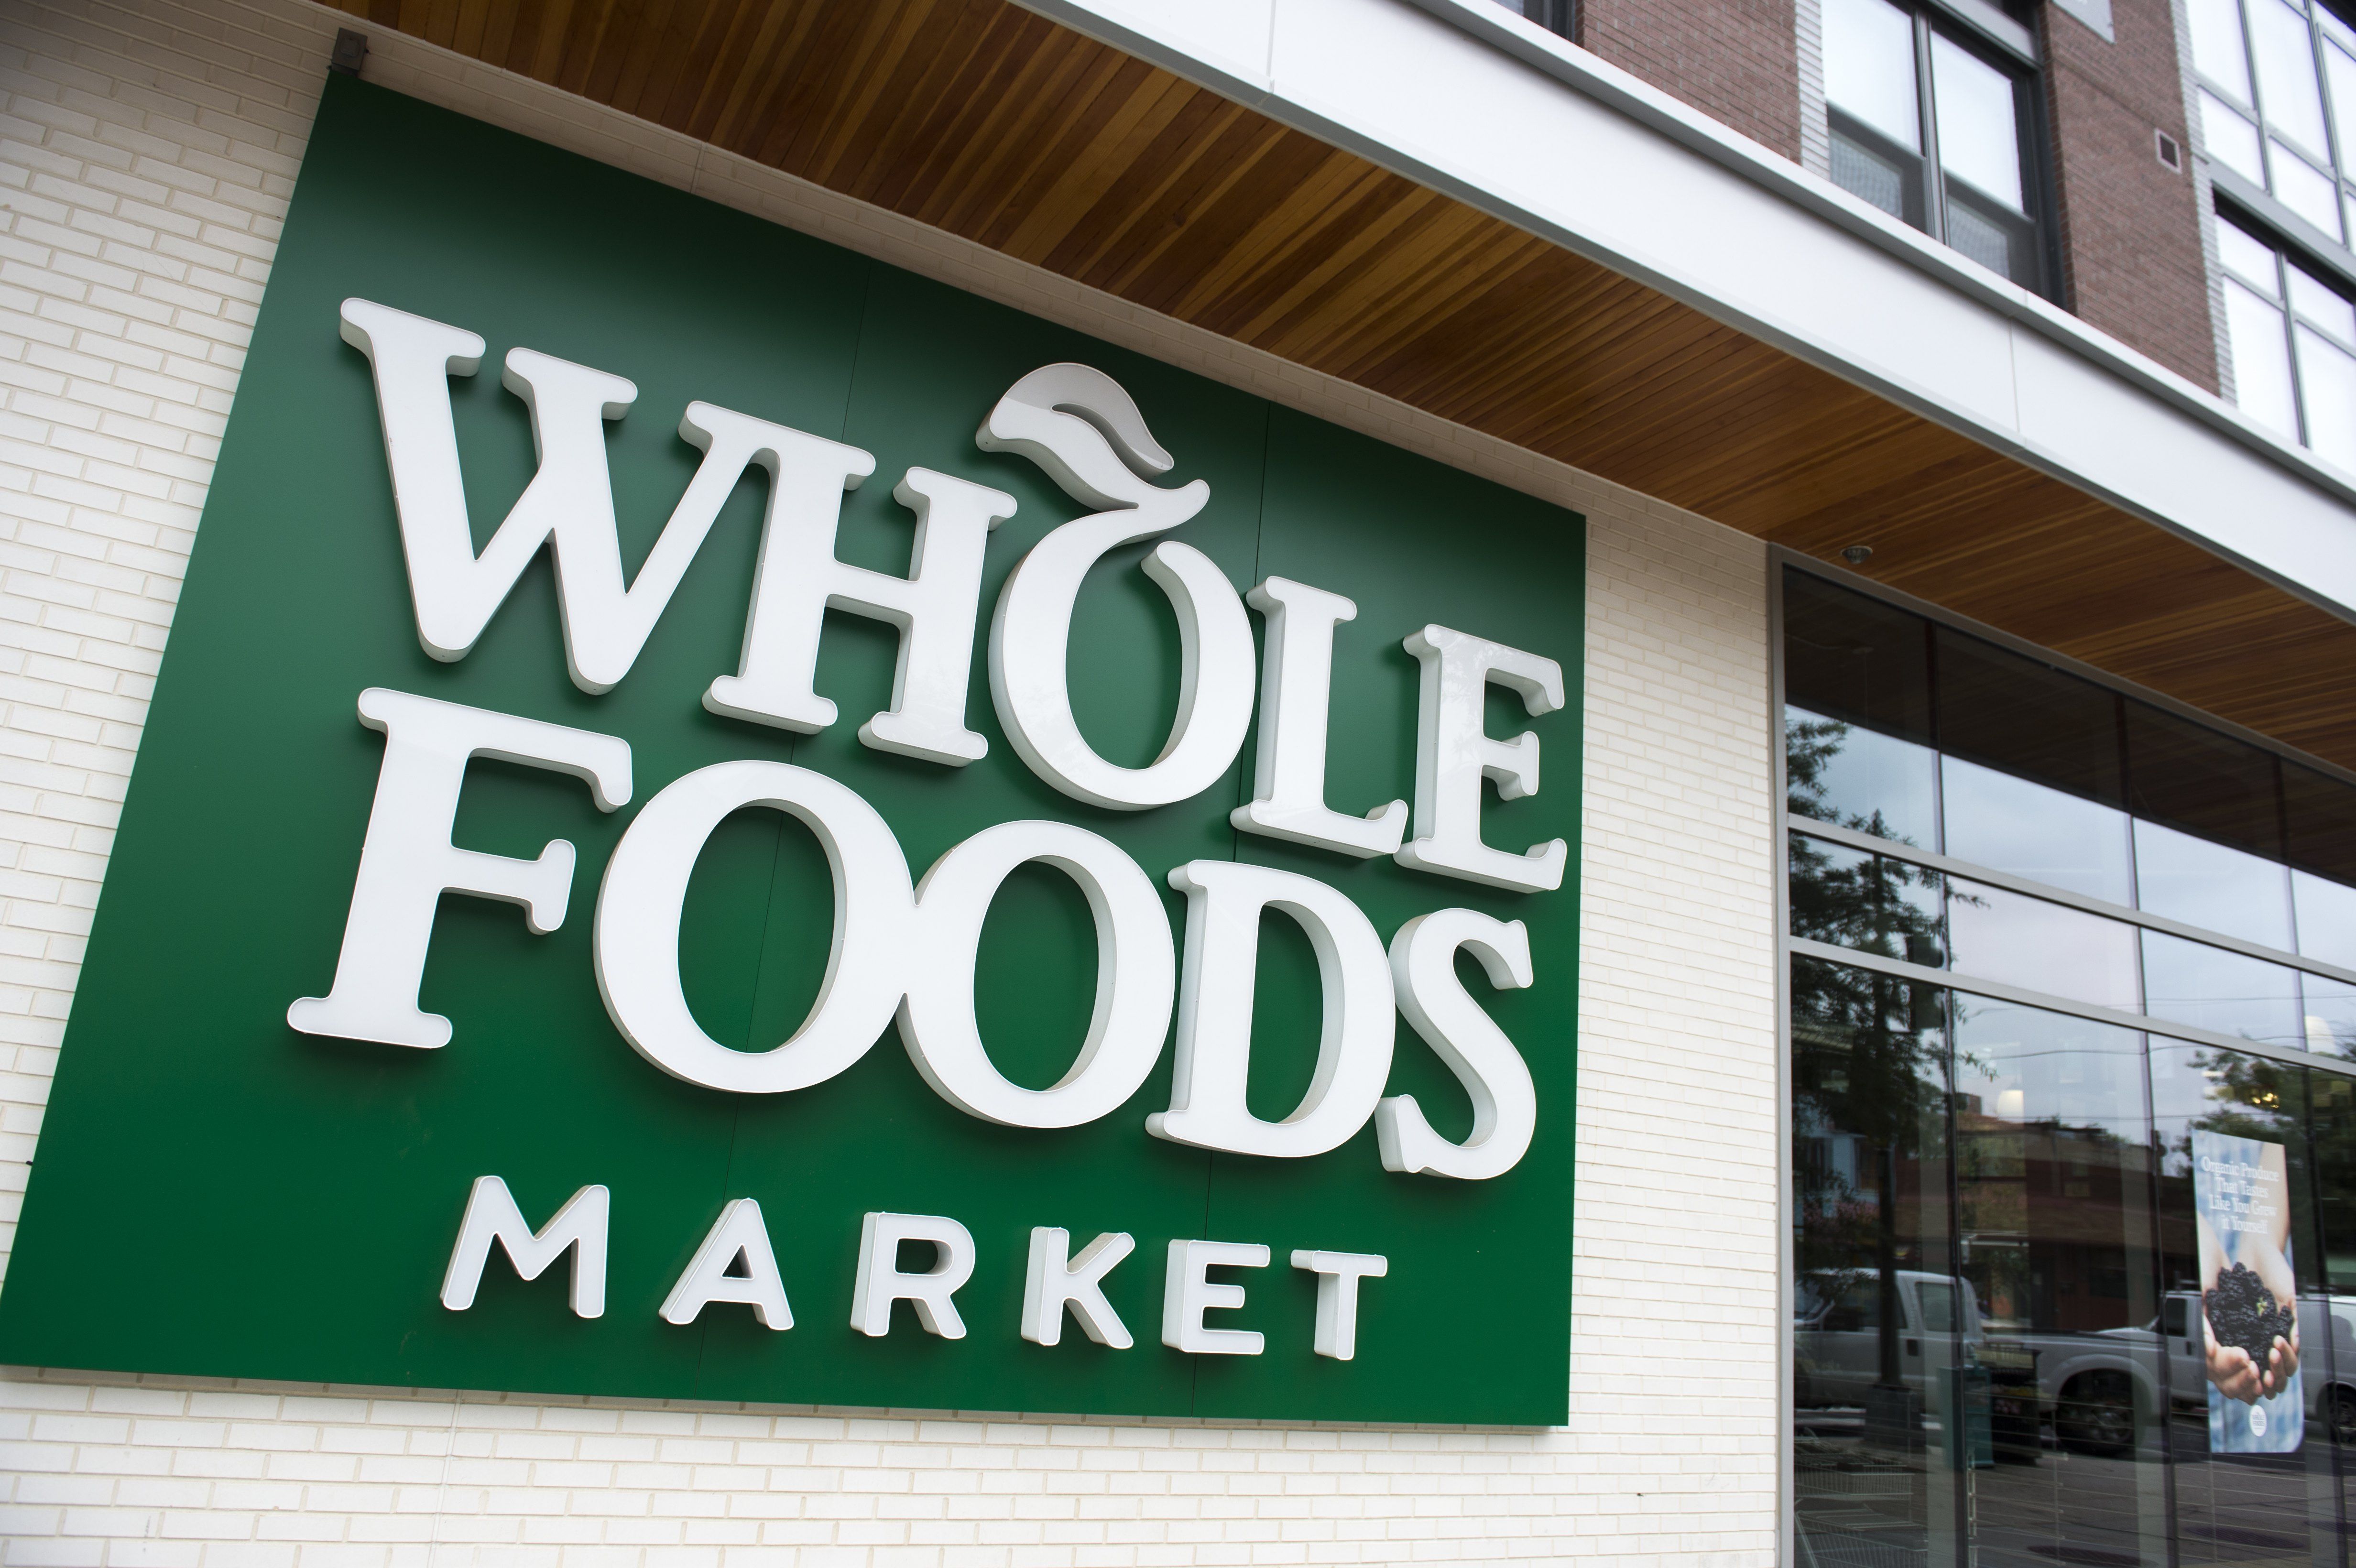 Detroit Whole Foods Market store shoppers should monitor for COVID-19 symptoms - Detroit Free Press